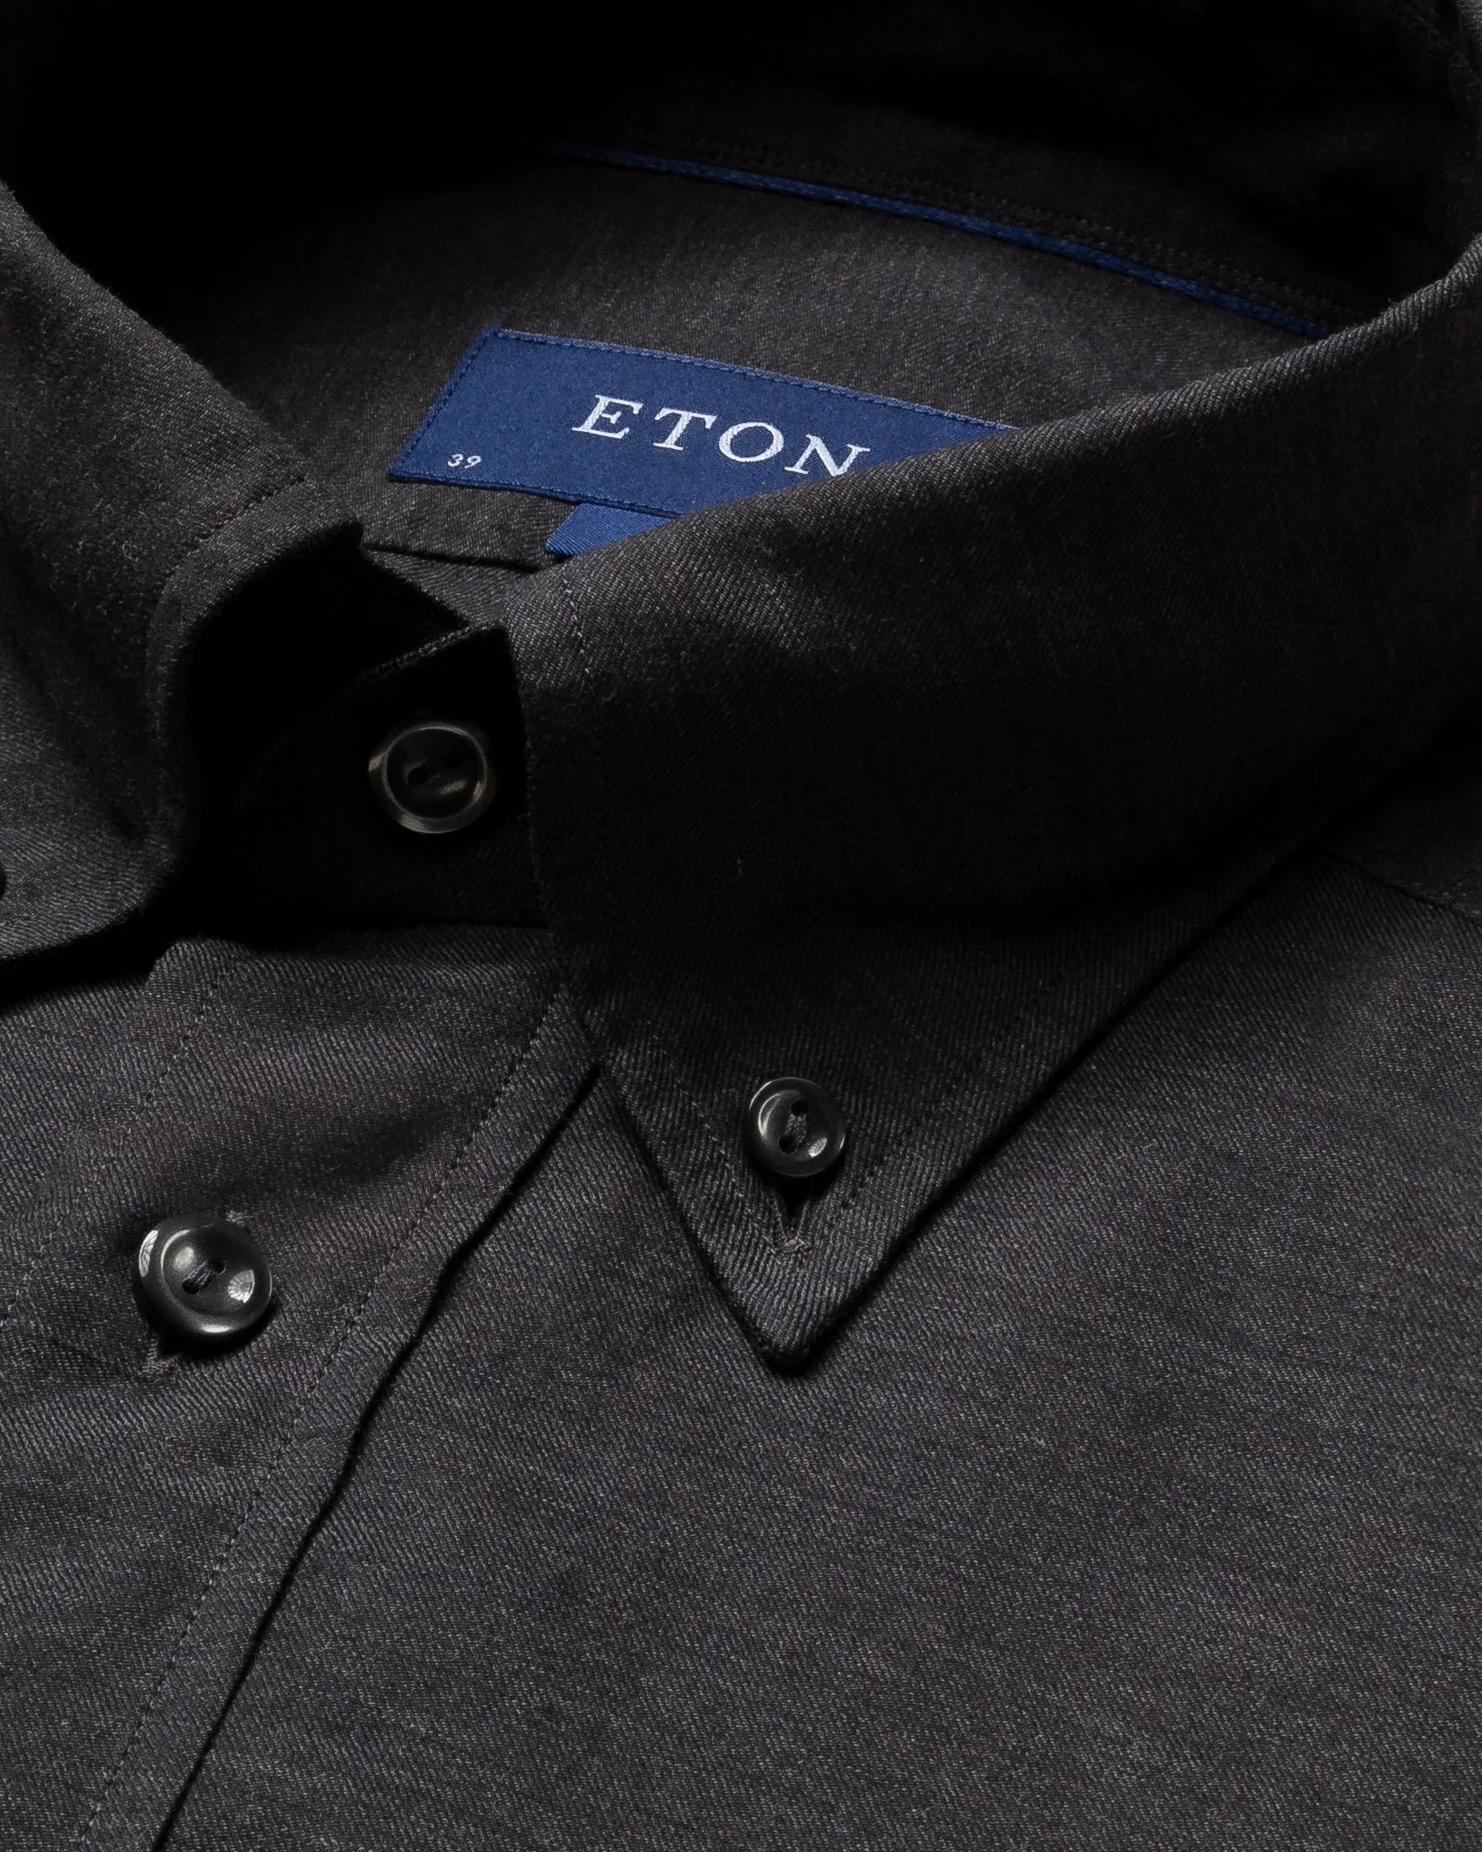 Eton - black flannel shirt